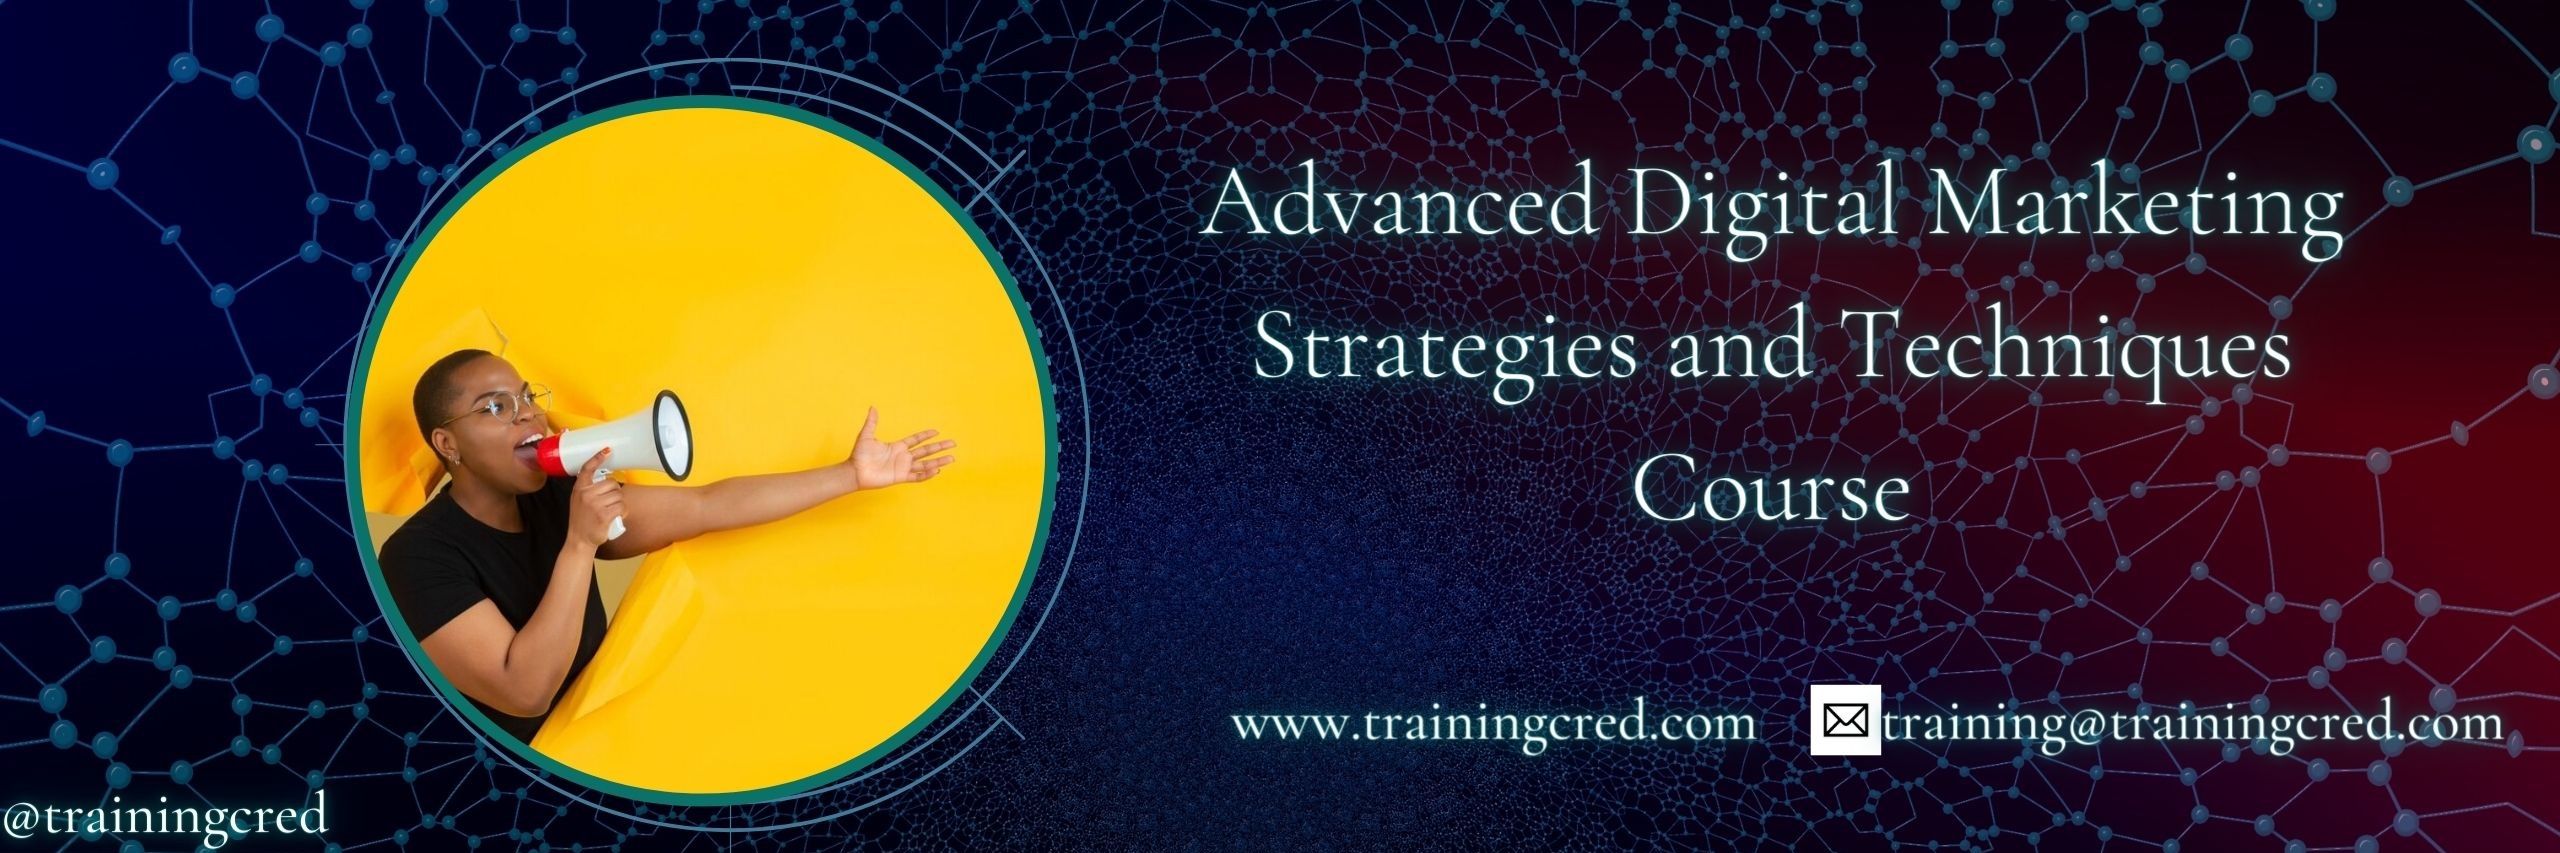 Advanced Digital Marketing Strategies and Techniques